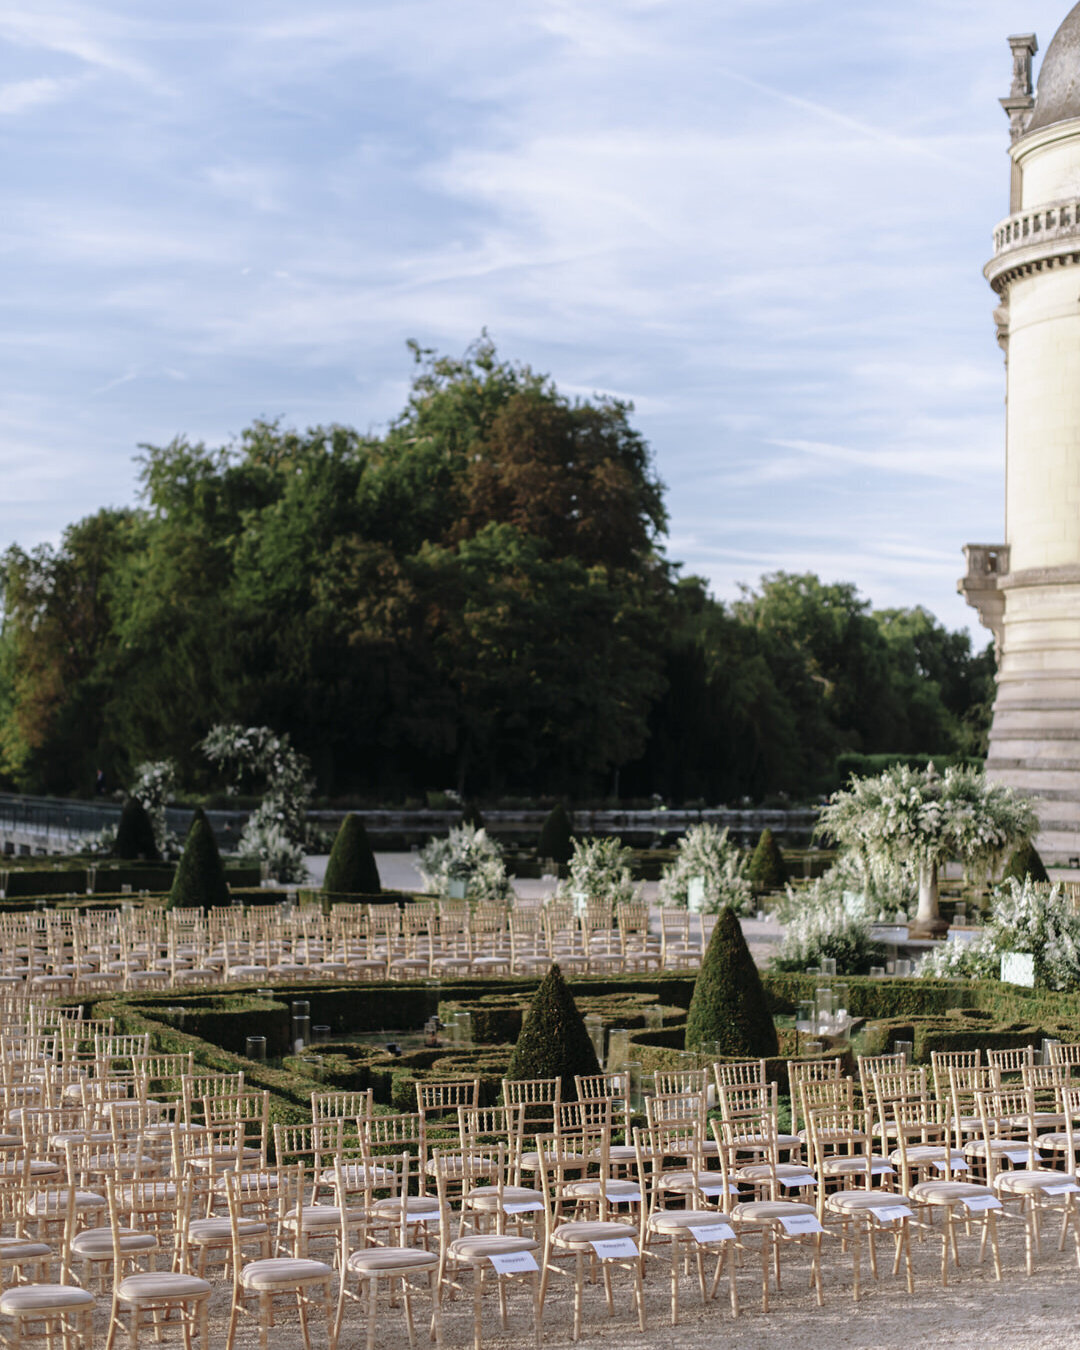 Paris Destination Wedding at Chateau de Chantilly by Alejandra Poupel Events chateau chantilly and sittings